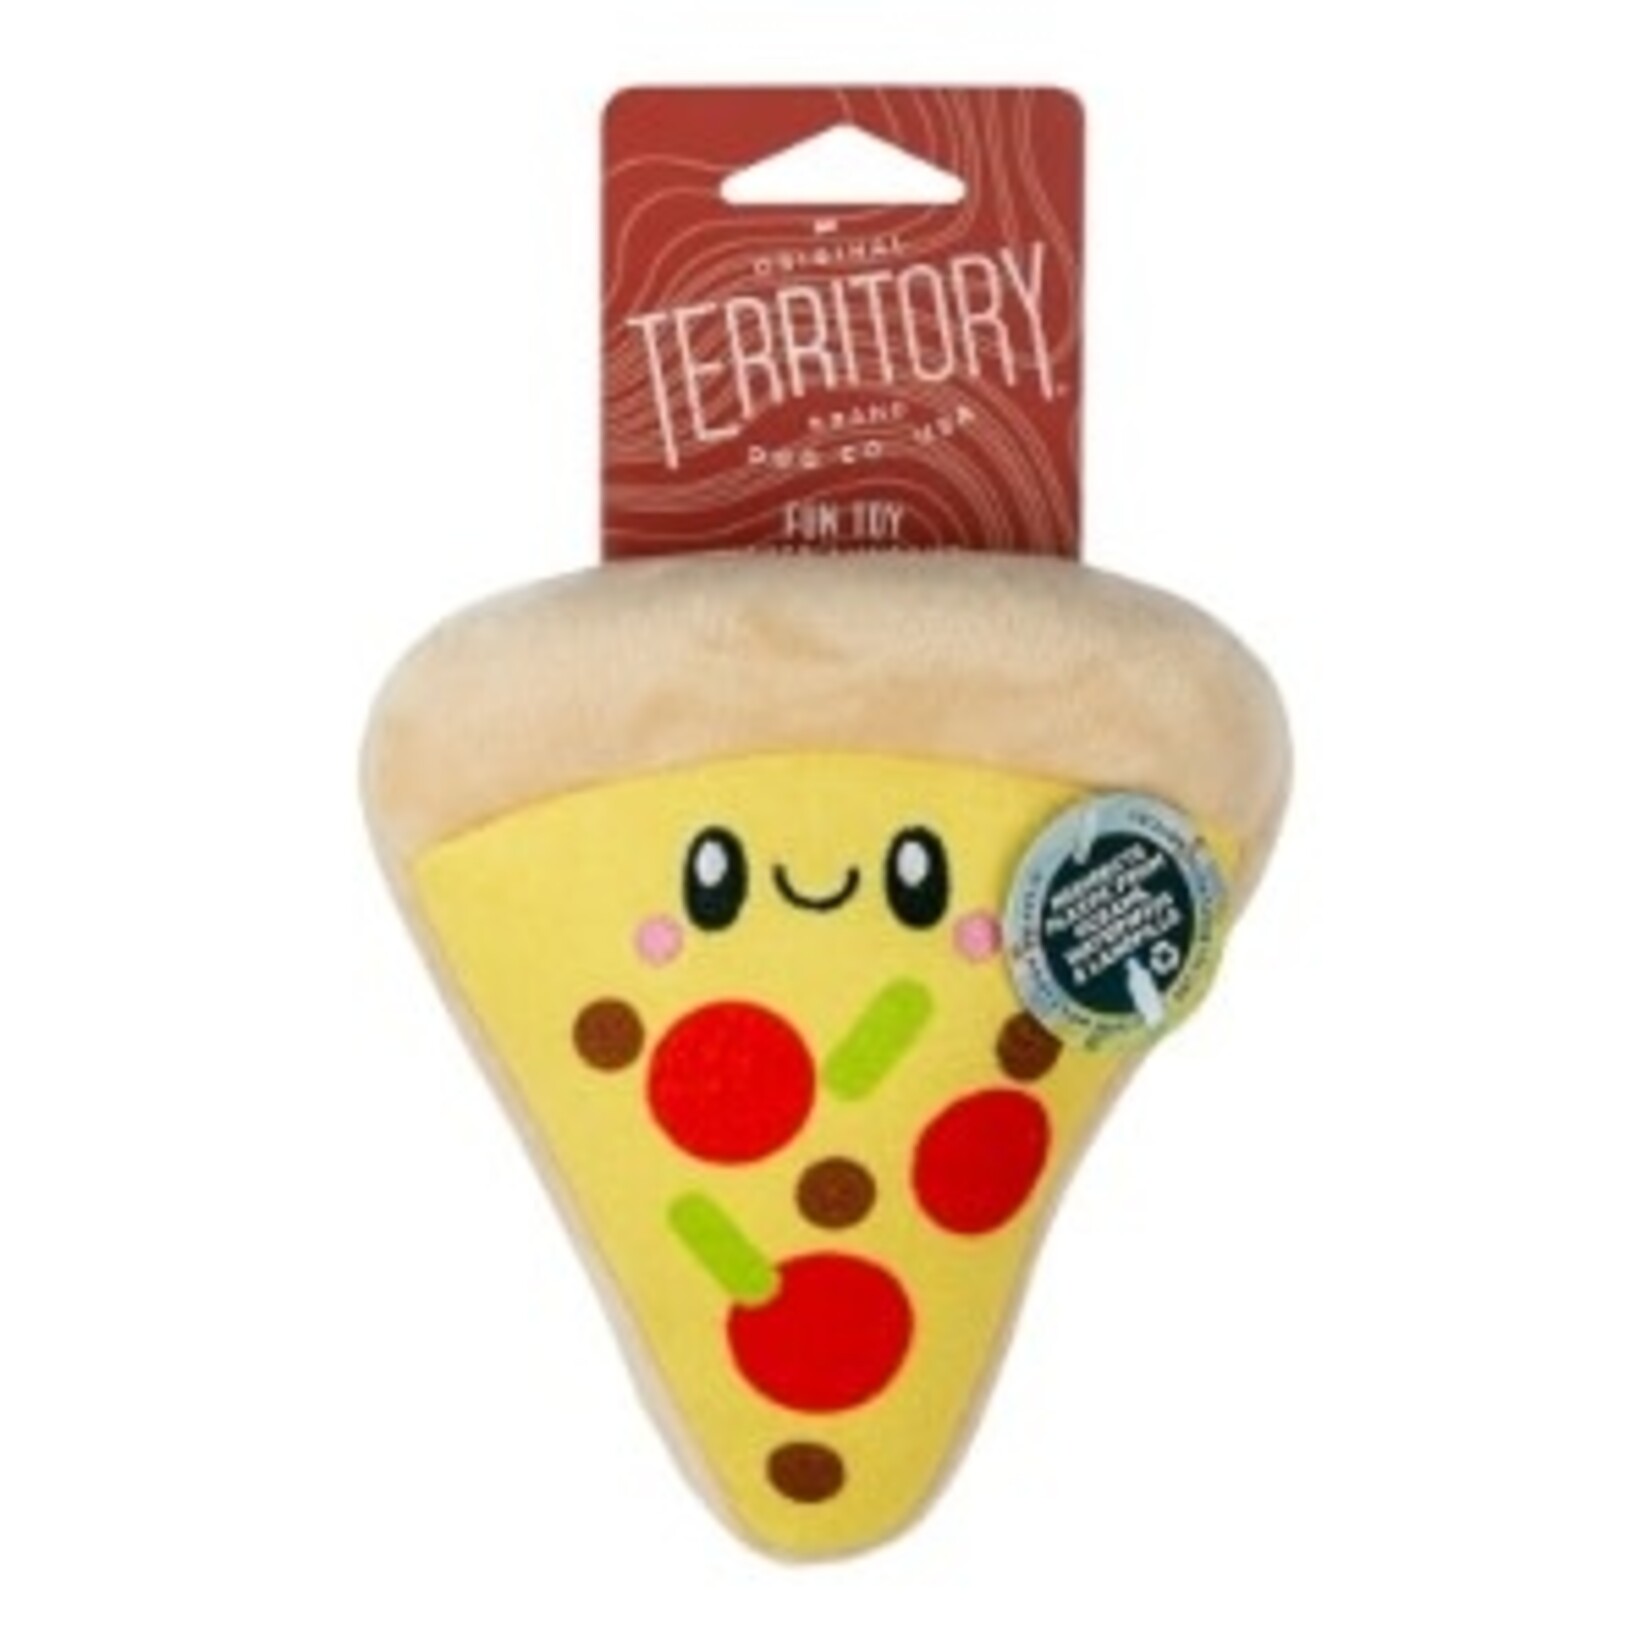 Territory Pet Territory Plush Squeaker Toy Pizza